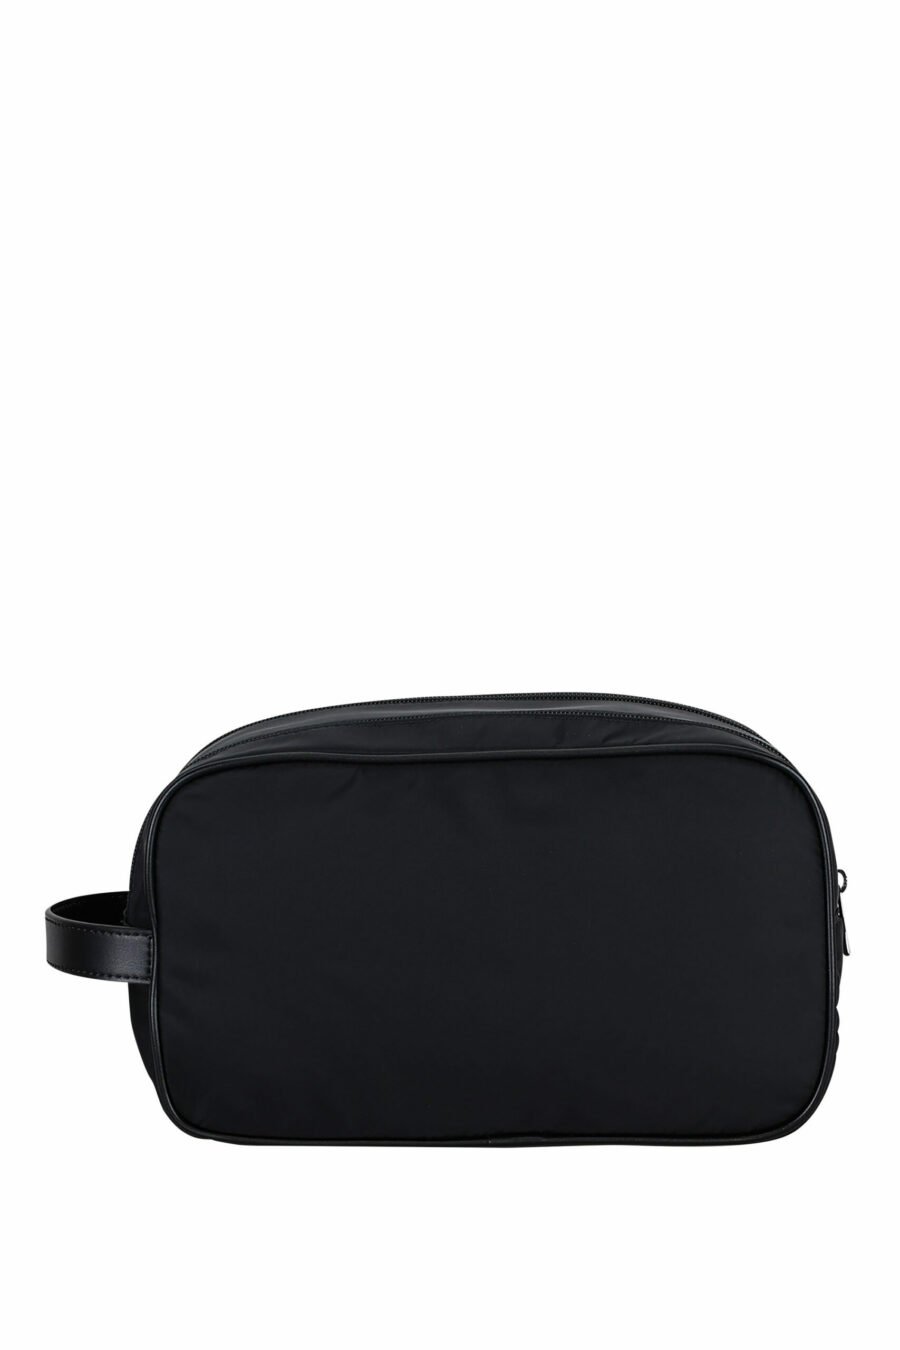 Black toilet bag with eagle mini logo - 8057767478162 1 scaled